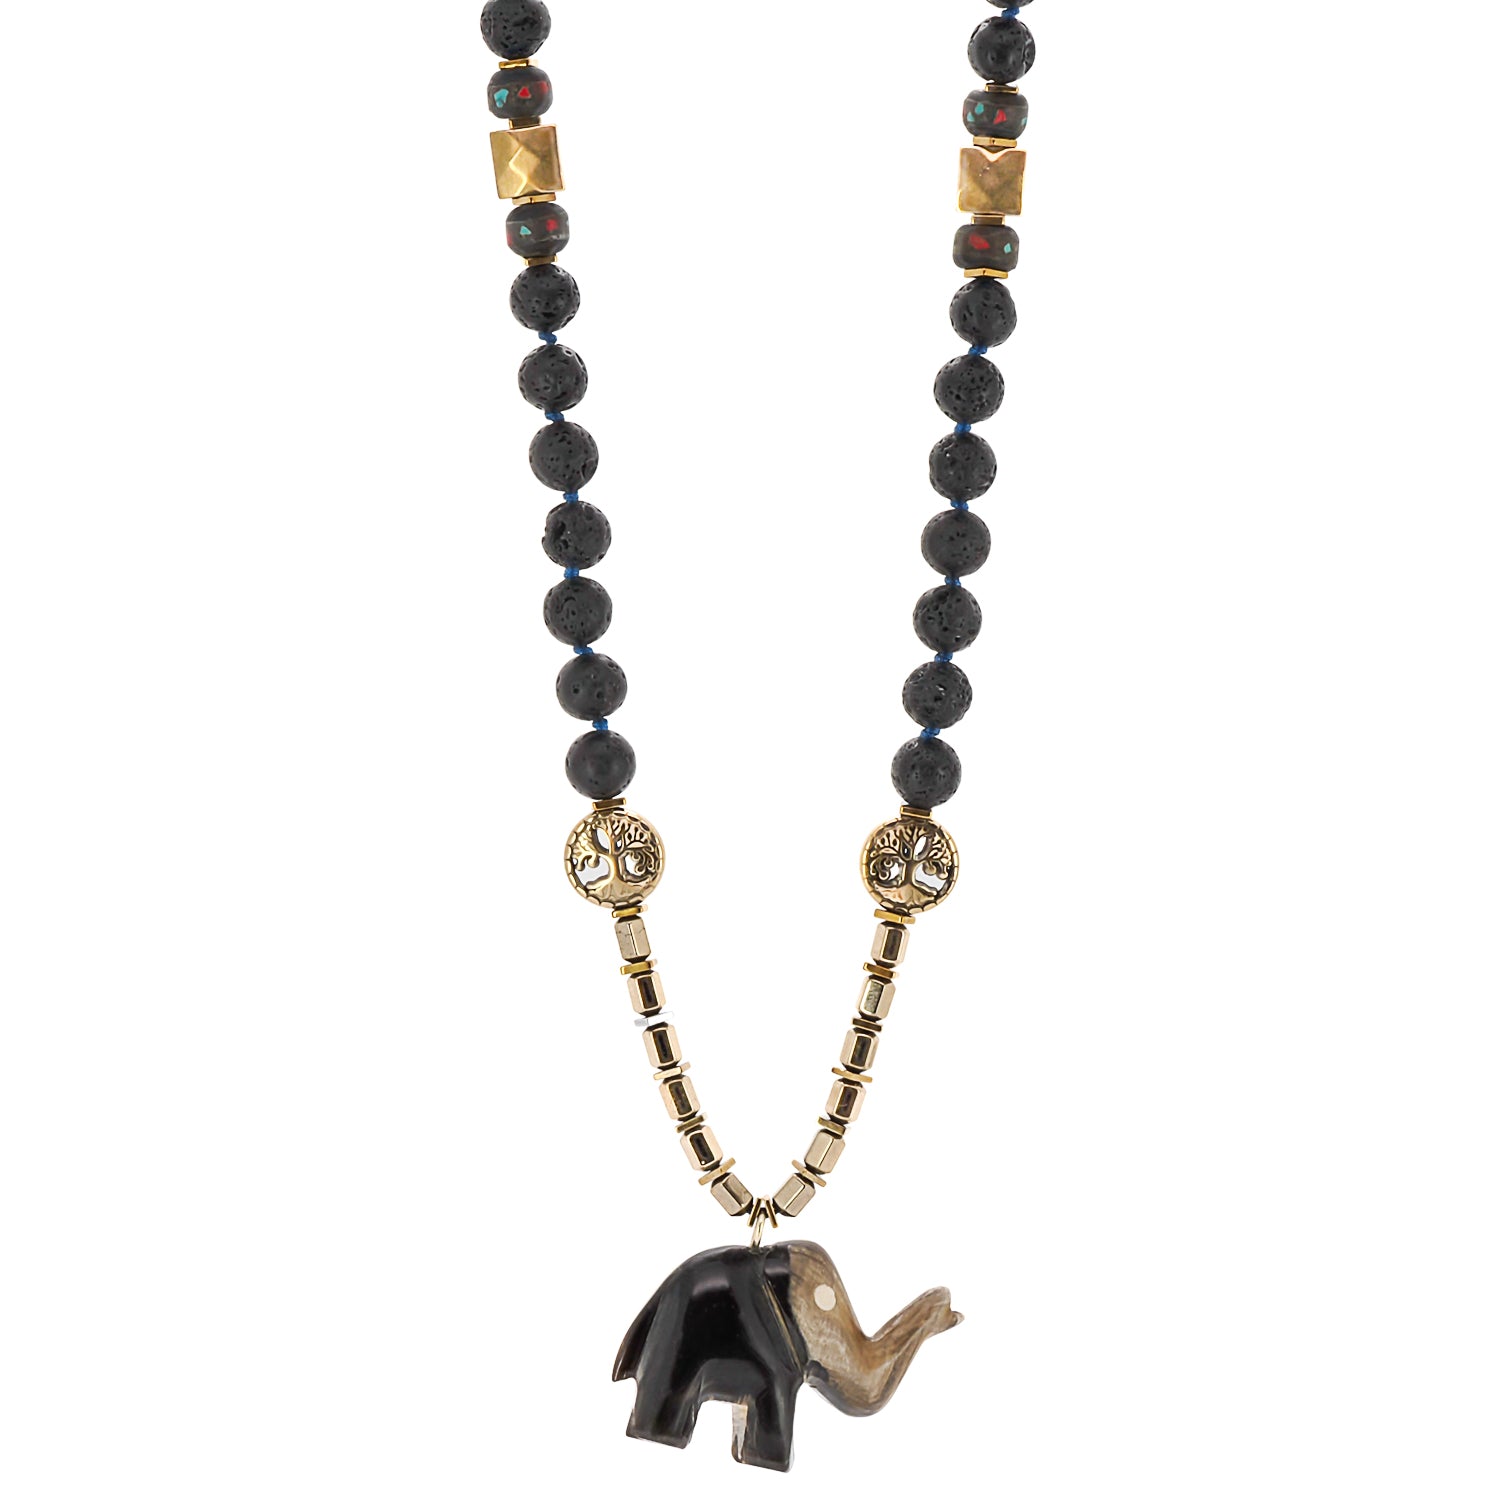 Experience the spiritual energy of the Spiritual Nepal Elephant Necklace